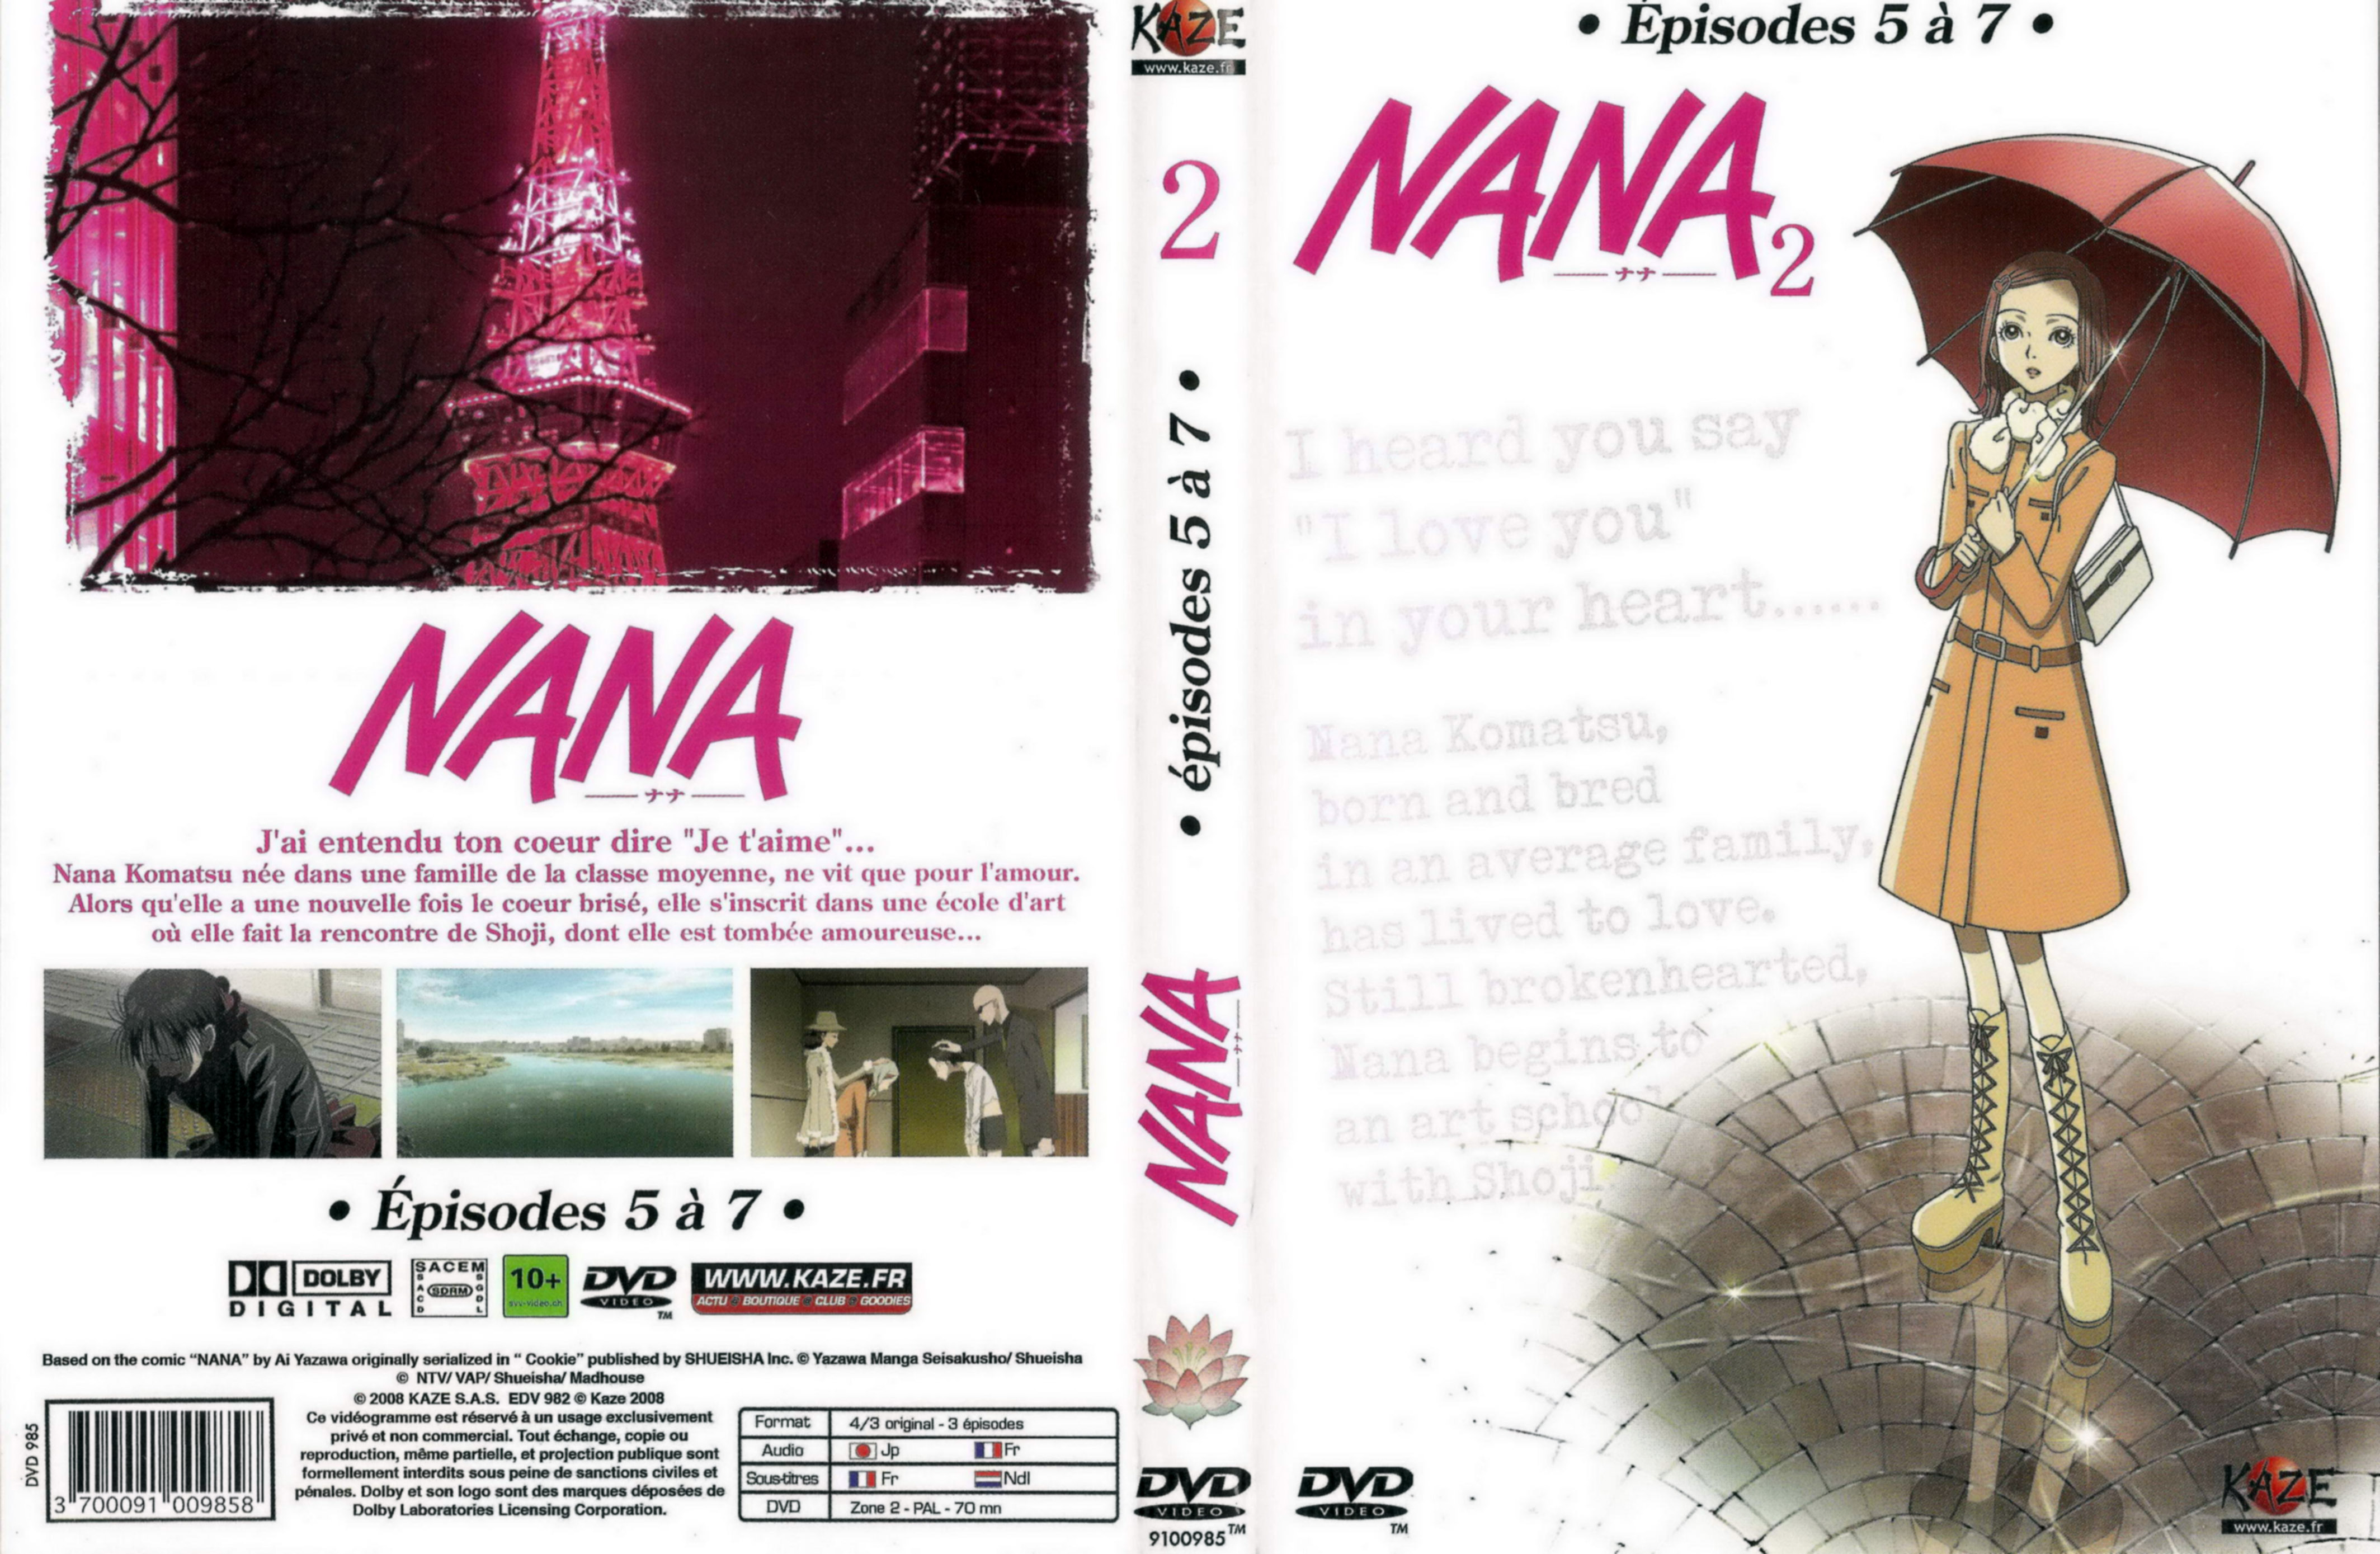 Jaquette DVD Nana DVD 2